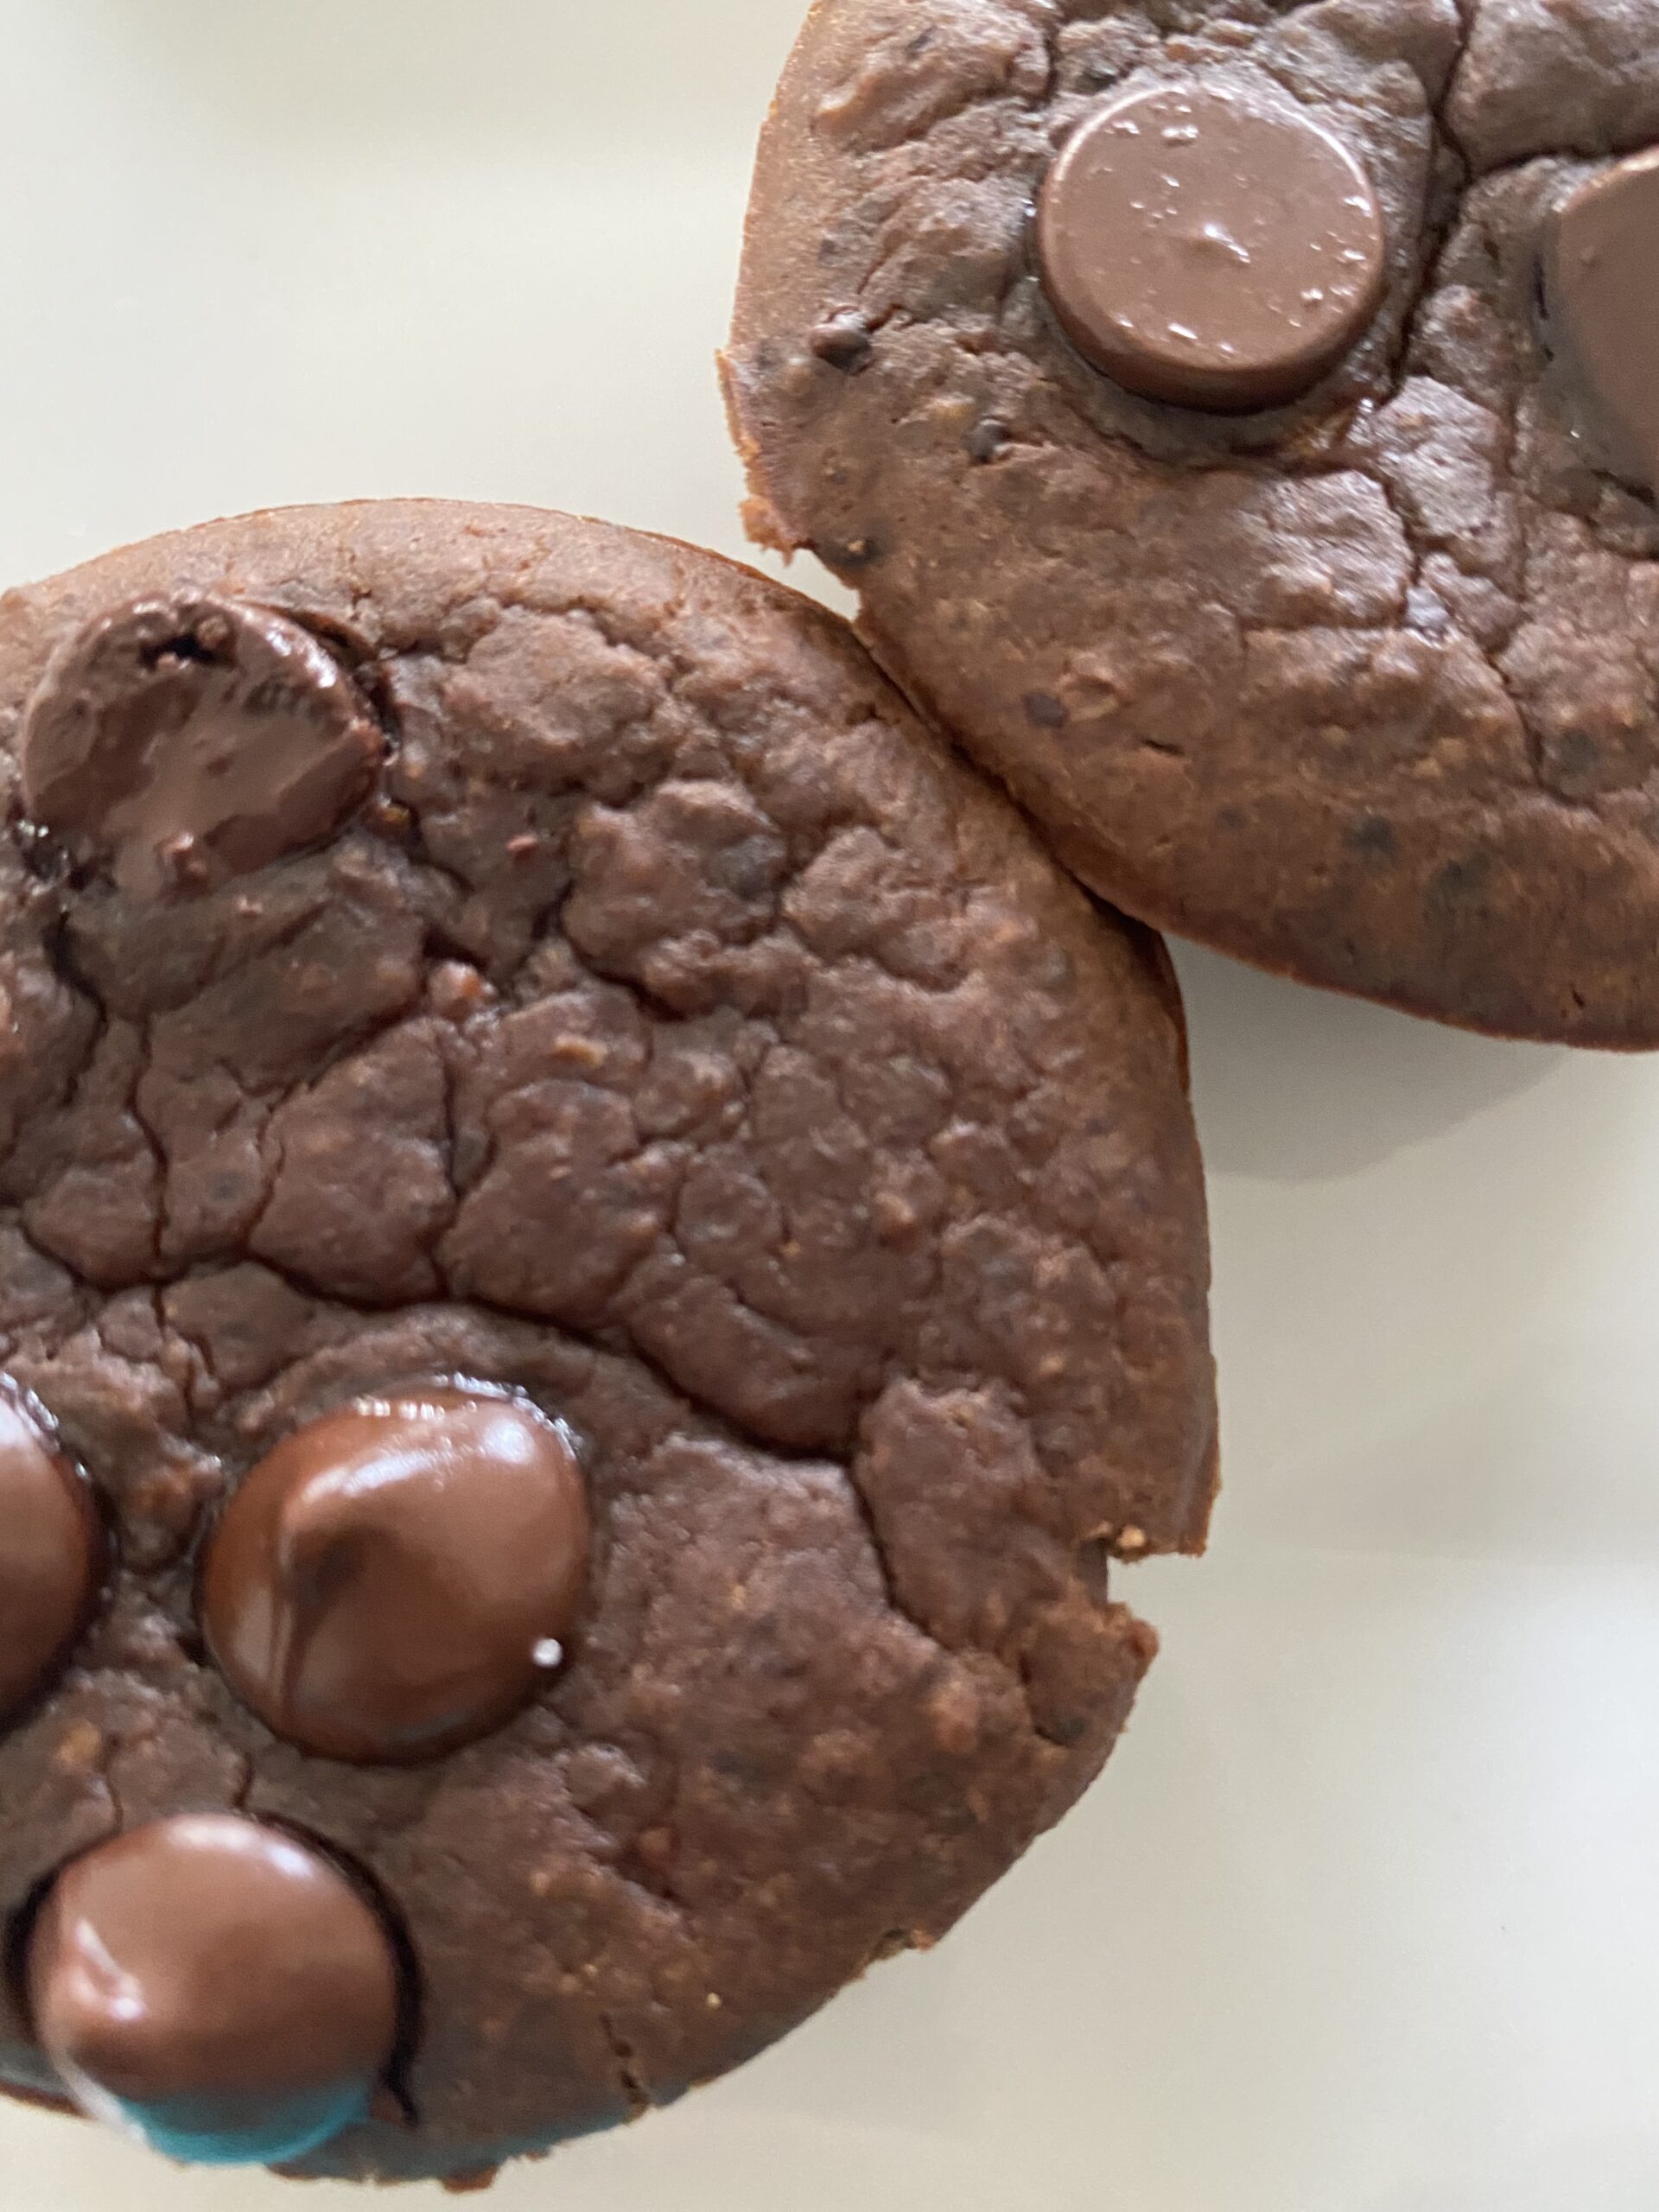 Flourless Black Bean Chocolate Muffins ready to enjoy